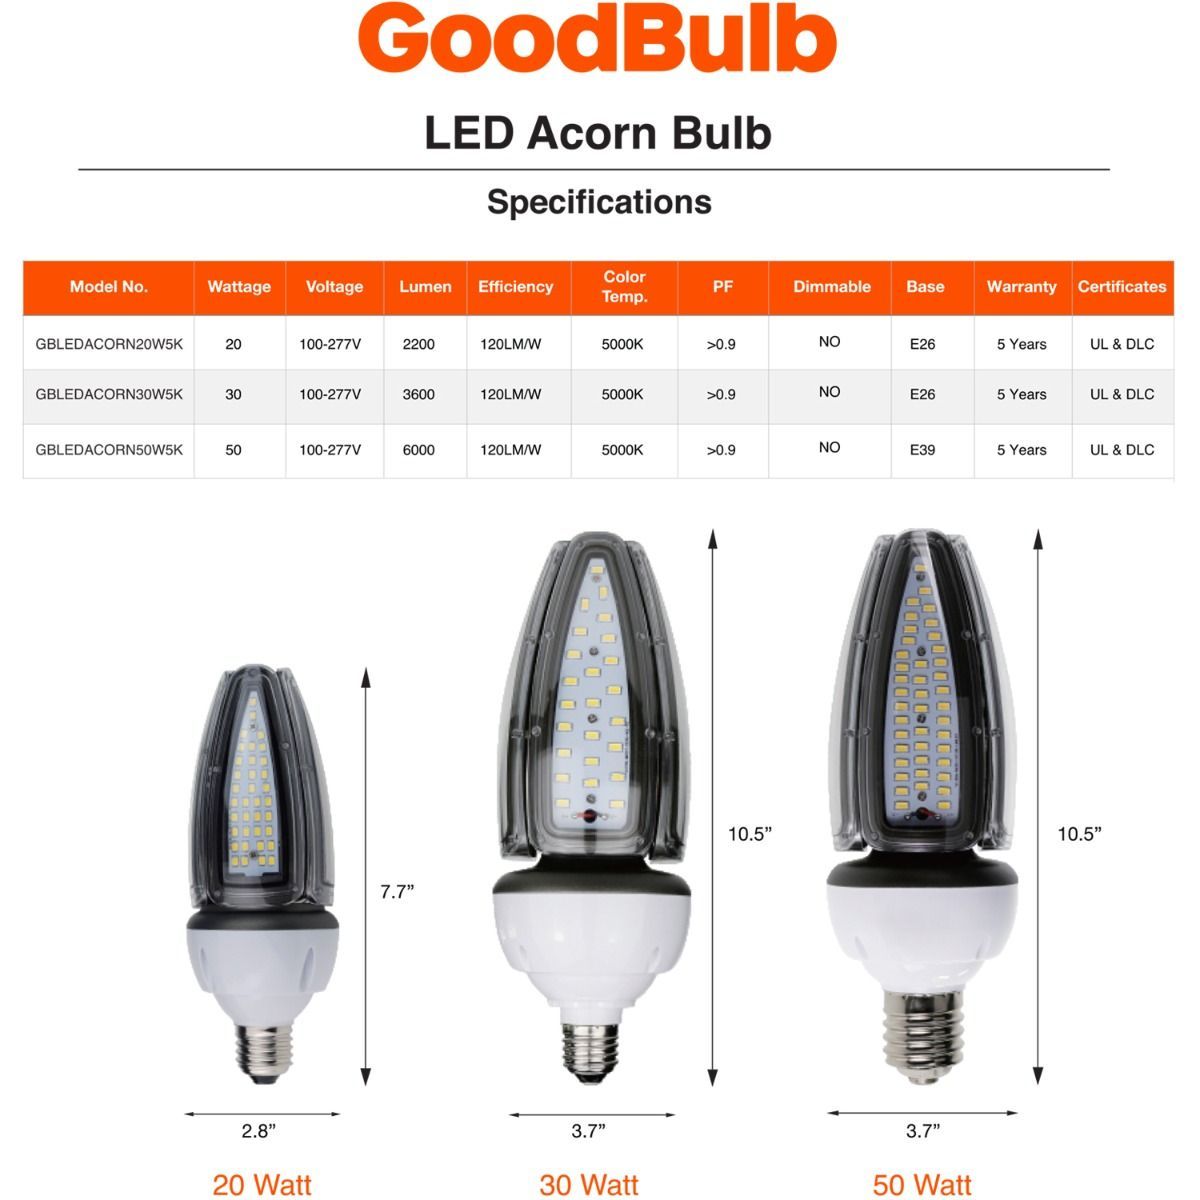 LED Acorn bulbs specification for either 20 watt, 30 watt, and 50 watt.